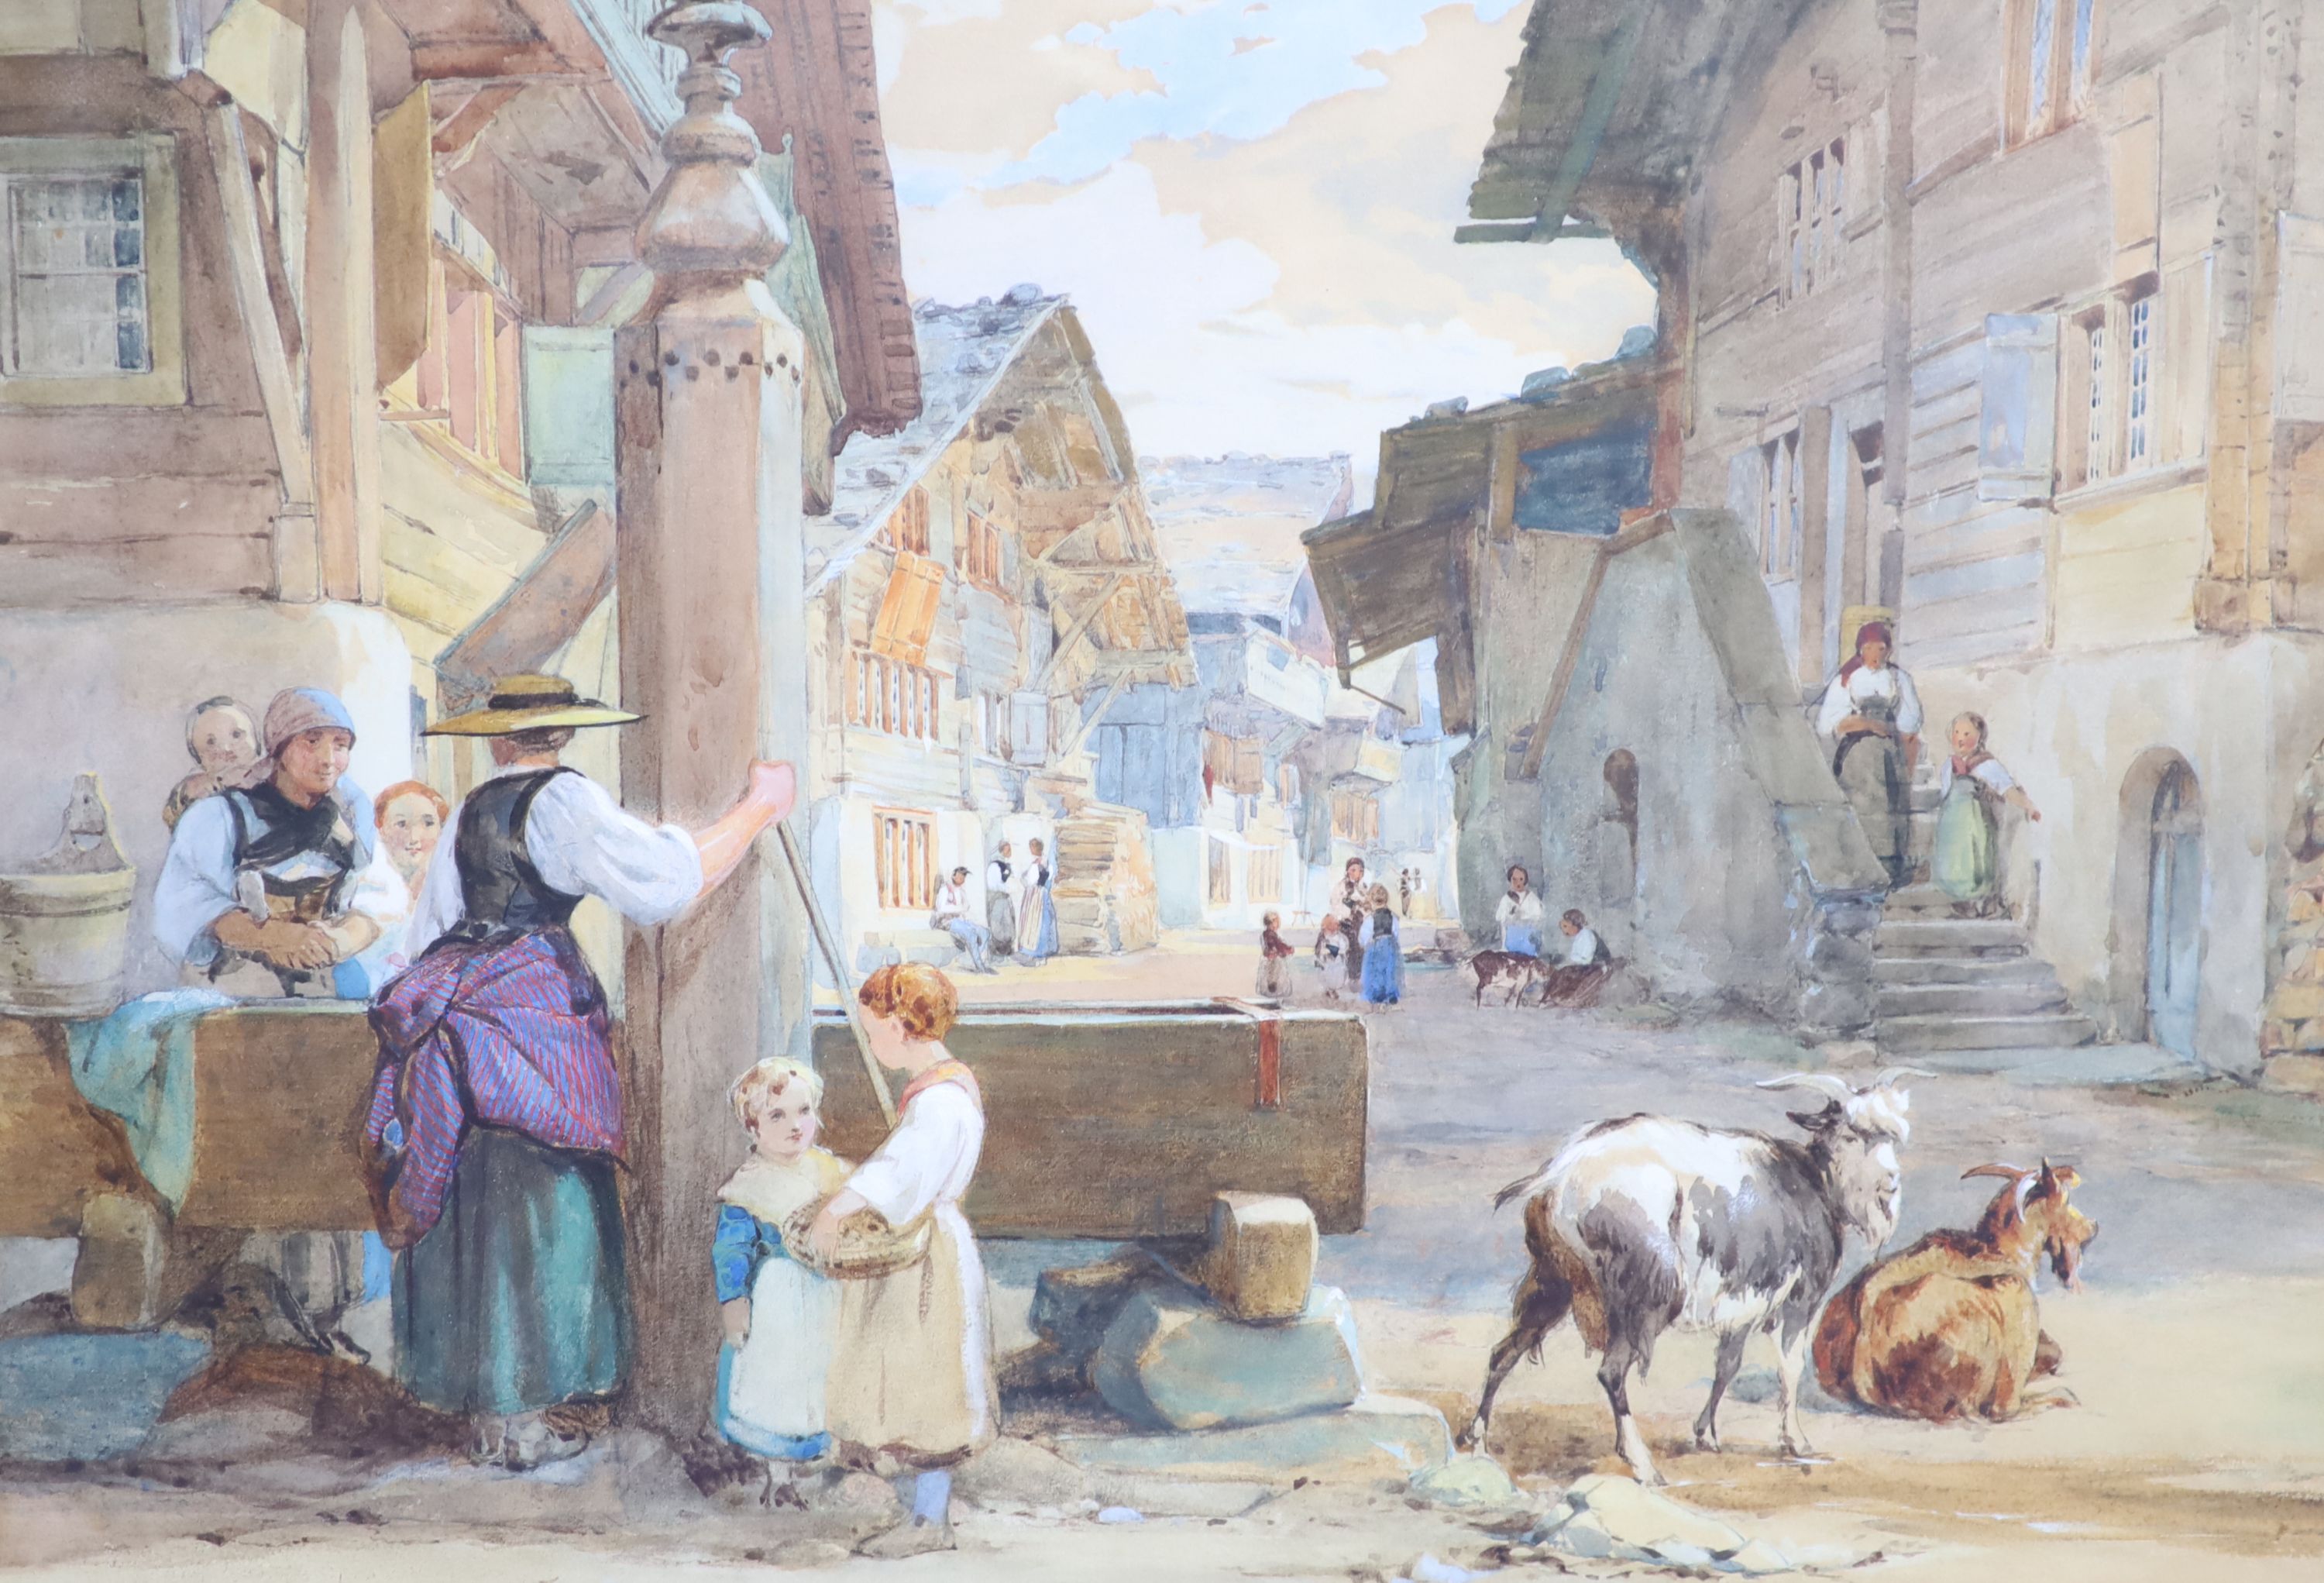 John Absolon (1815-1895), Alpine market scenes, pair of watercolours, 35 x 51 cm